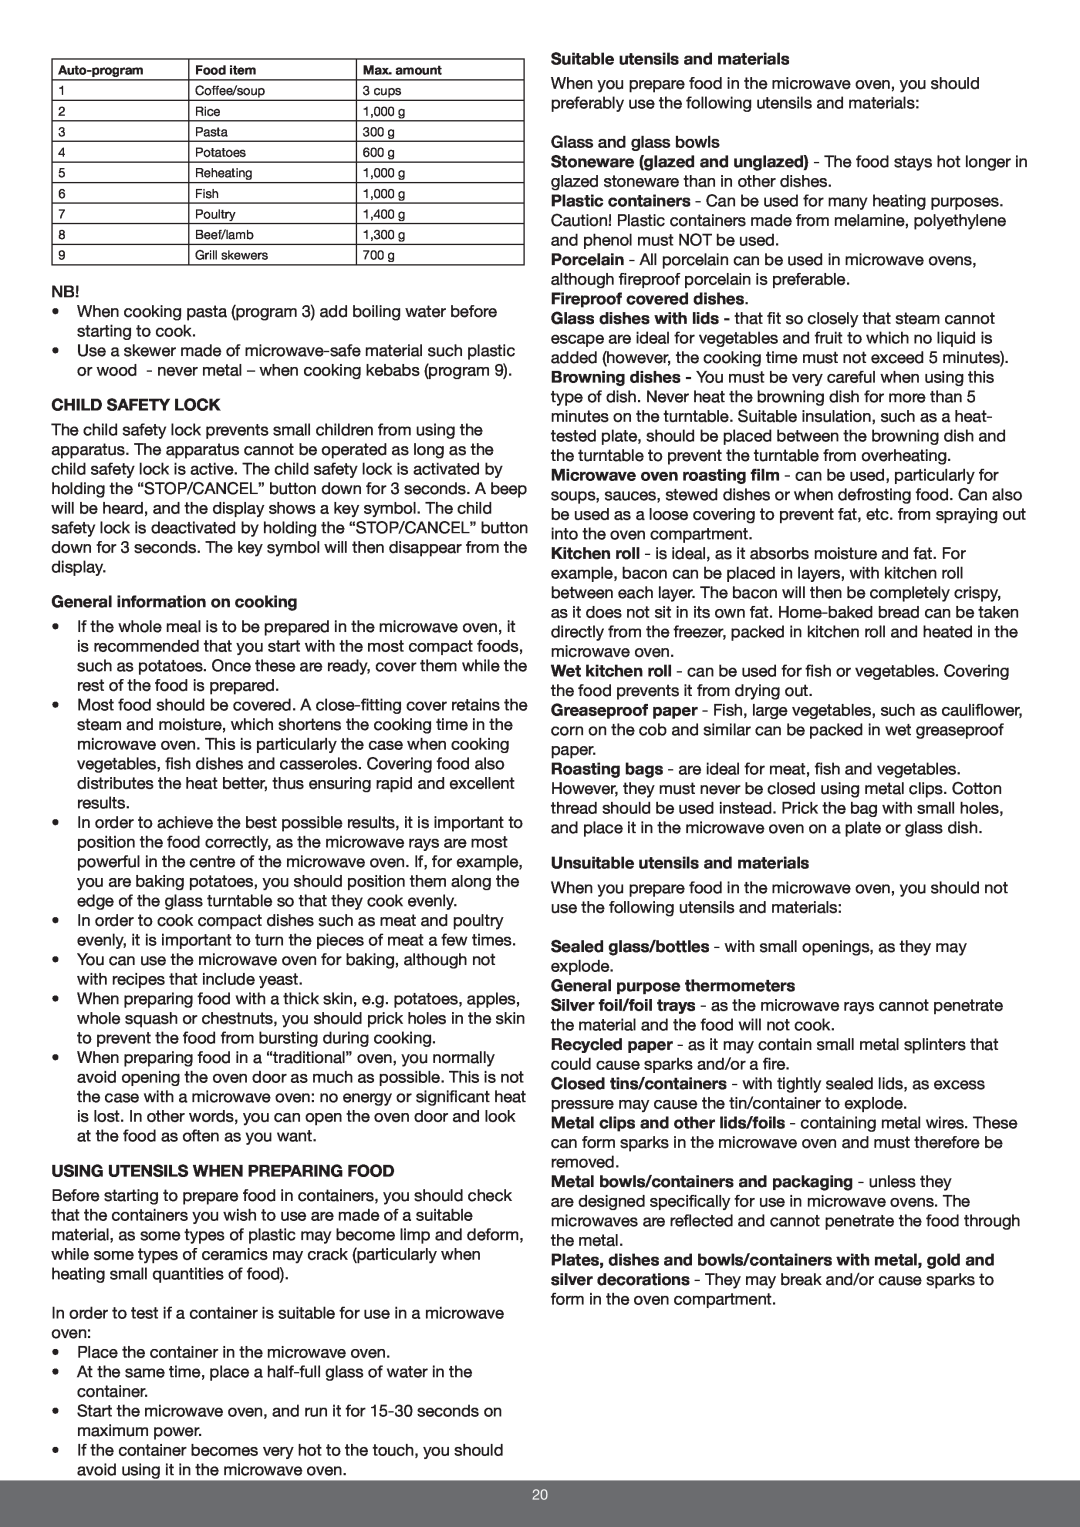 Melissa 653-092/093 manual Child Safety Lock, General information on cooking, Using Utensils When Preparing Food 